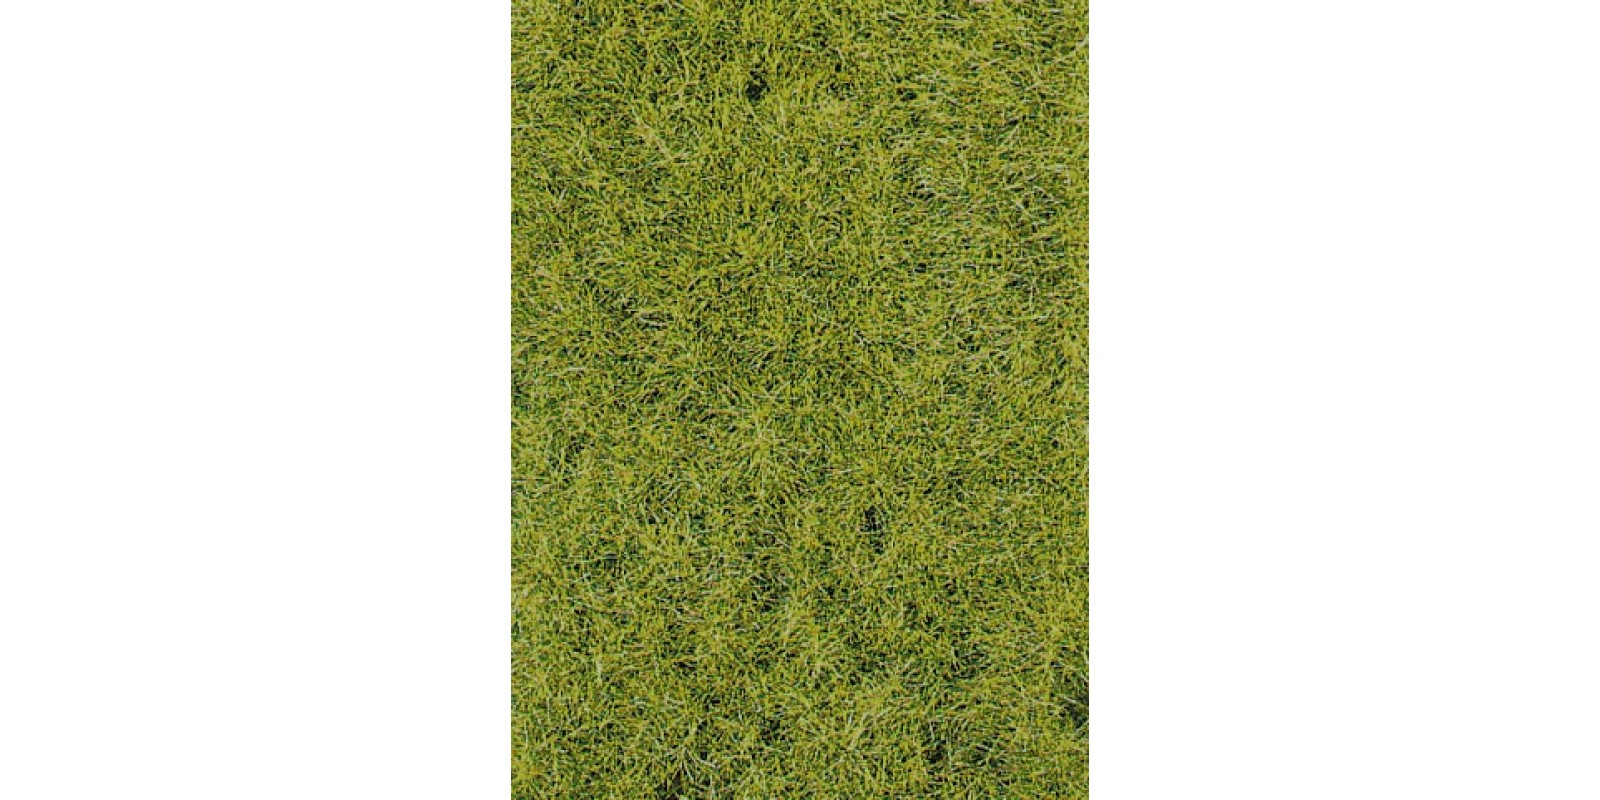 He3368 static wild grass forest floor, 75 g